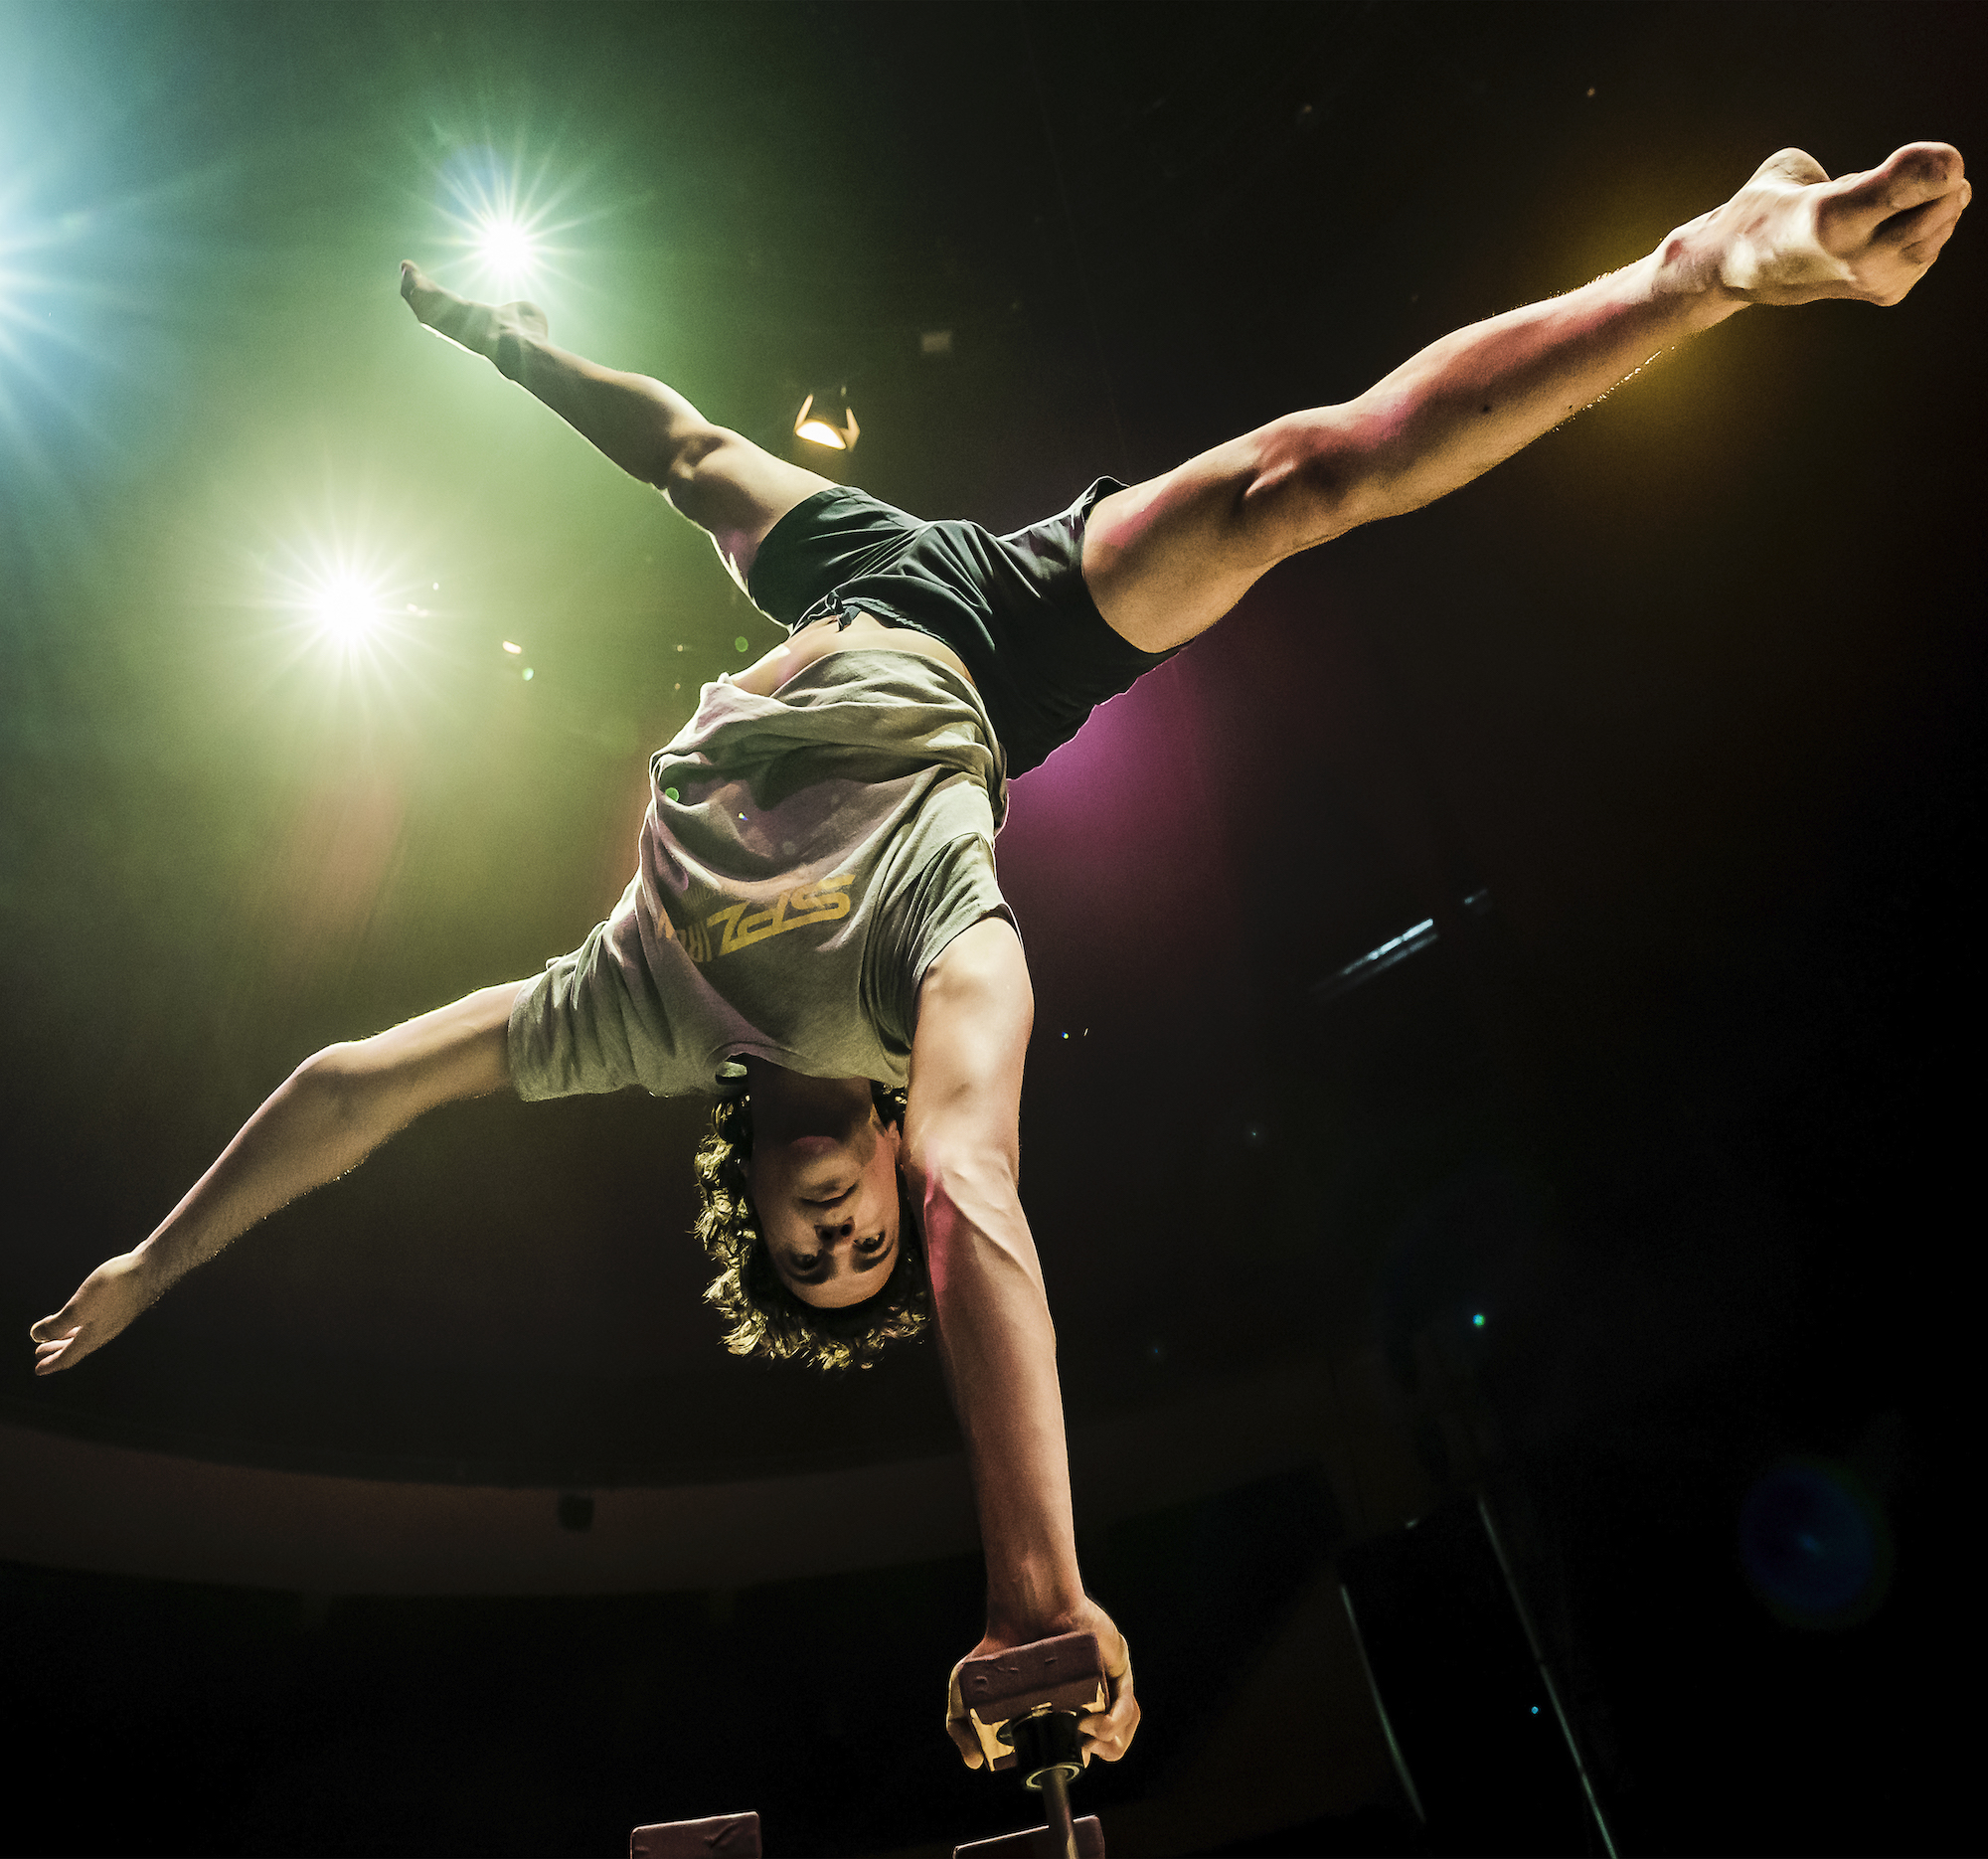 Gaby Merz photograph of hand balancer Juan Carlos Panduro performing on stilts at the FIRCO festival